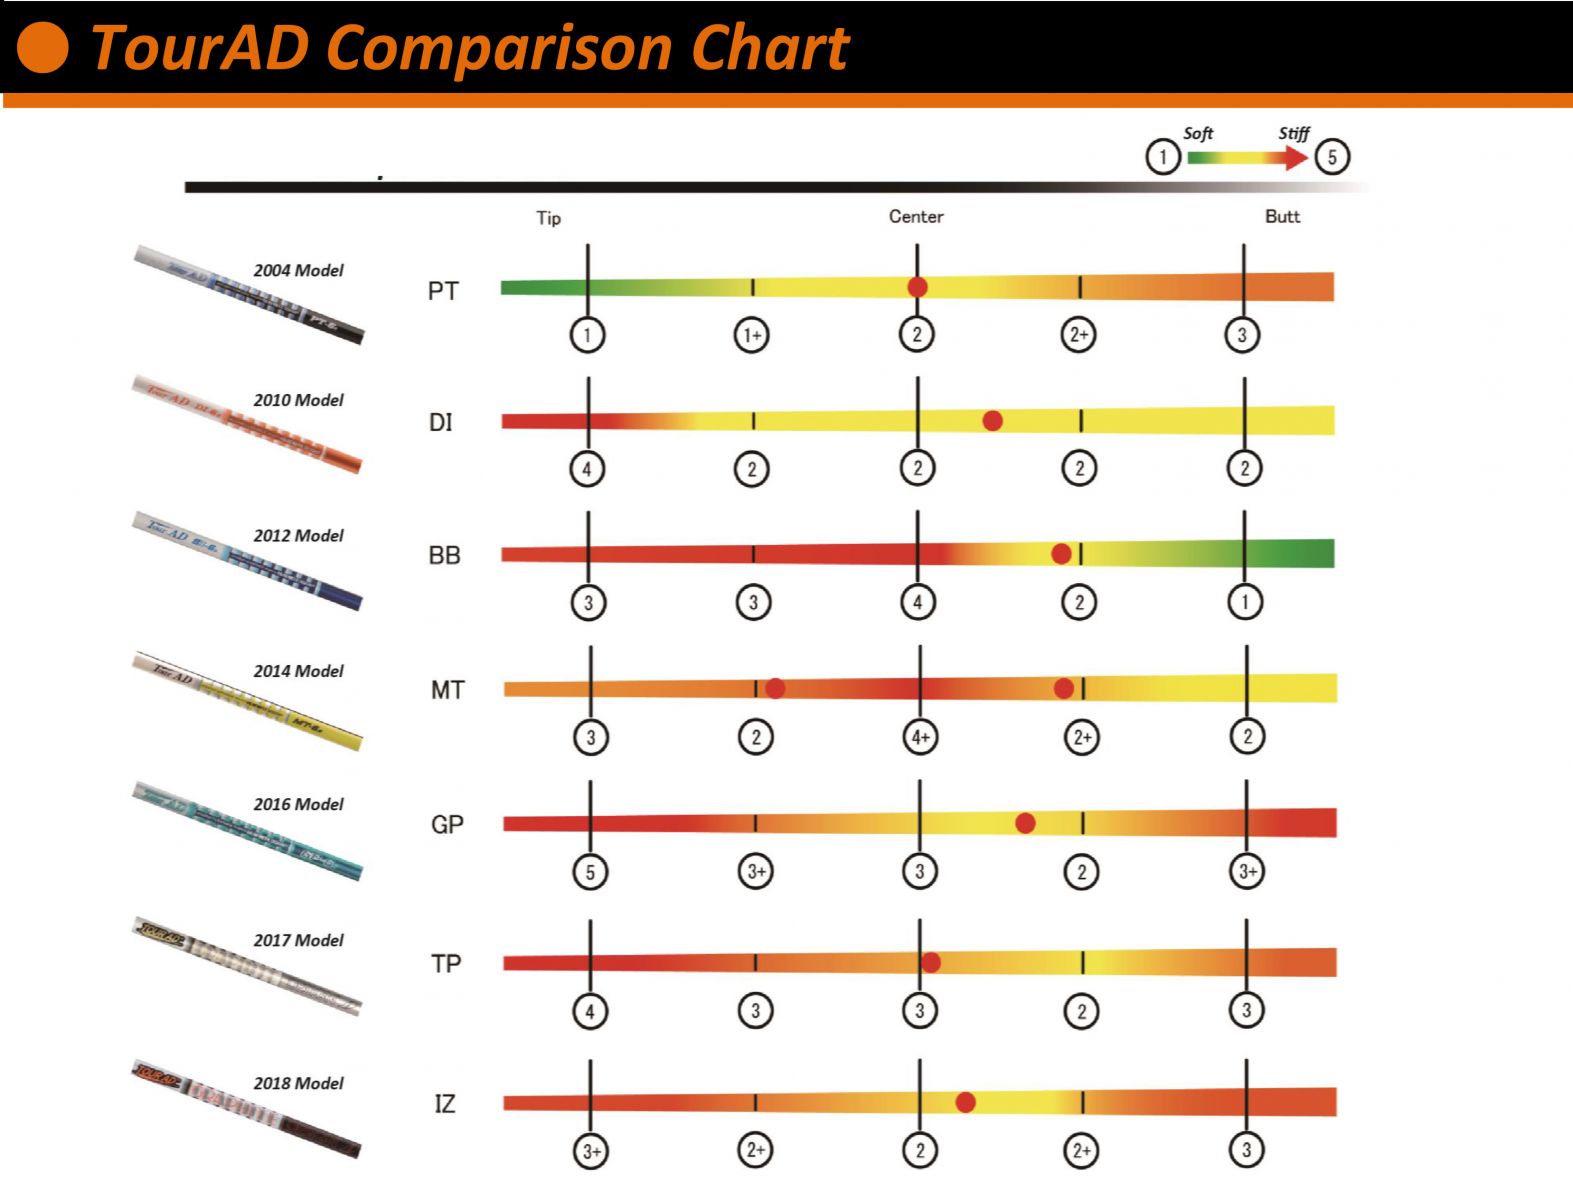 Graphite Design Shaft Chart